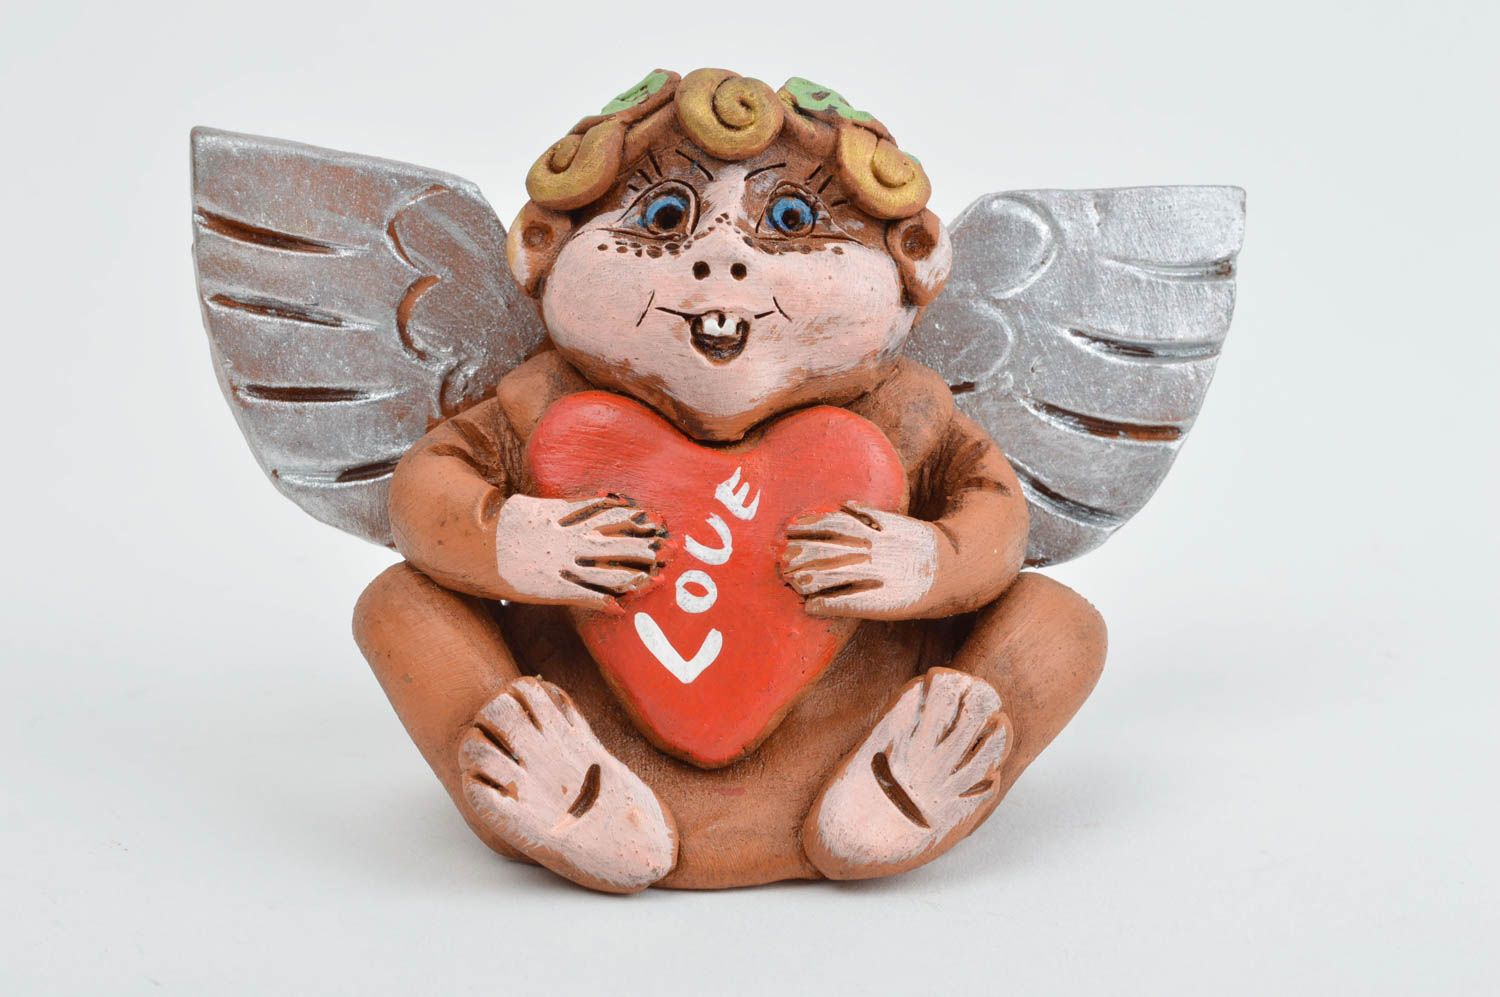 Handmade angel figurine ceramic figurine for decorative use only home decor photo 2